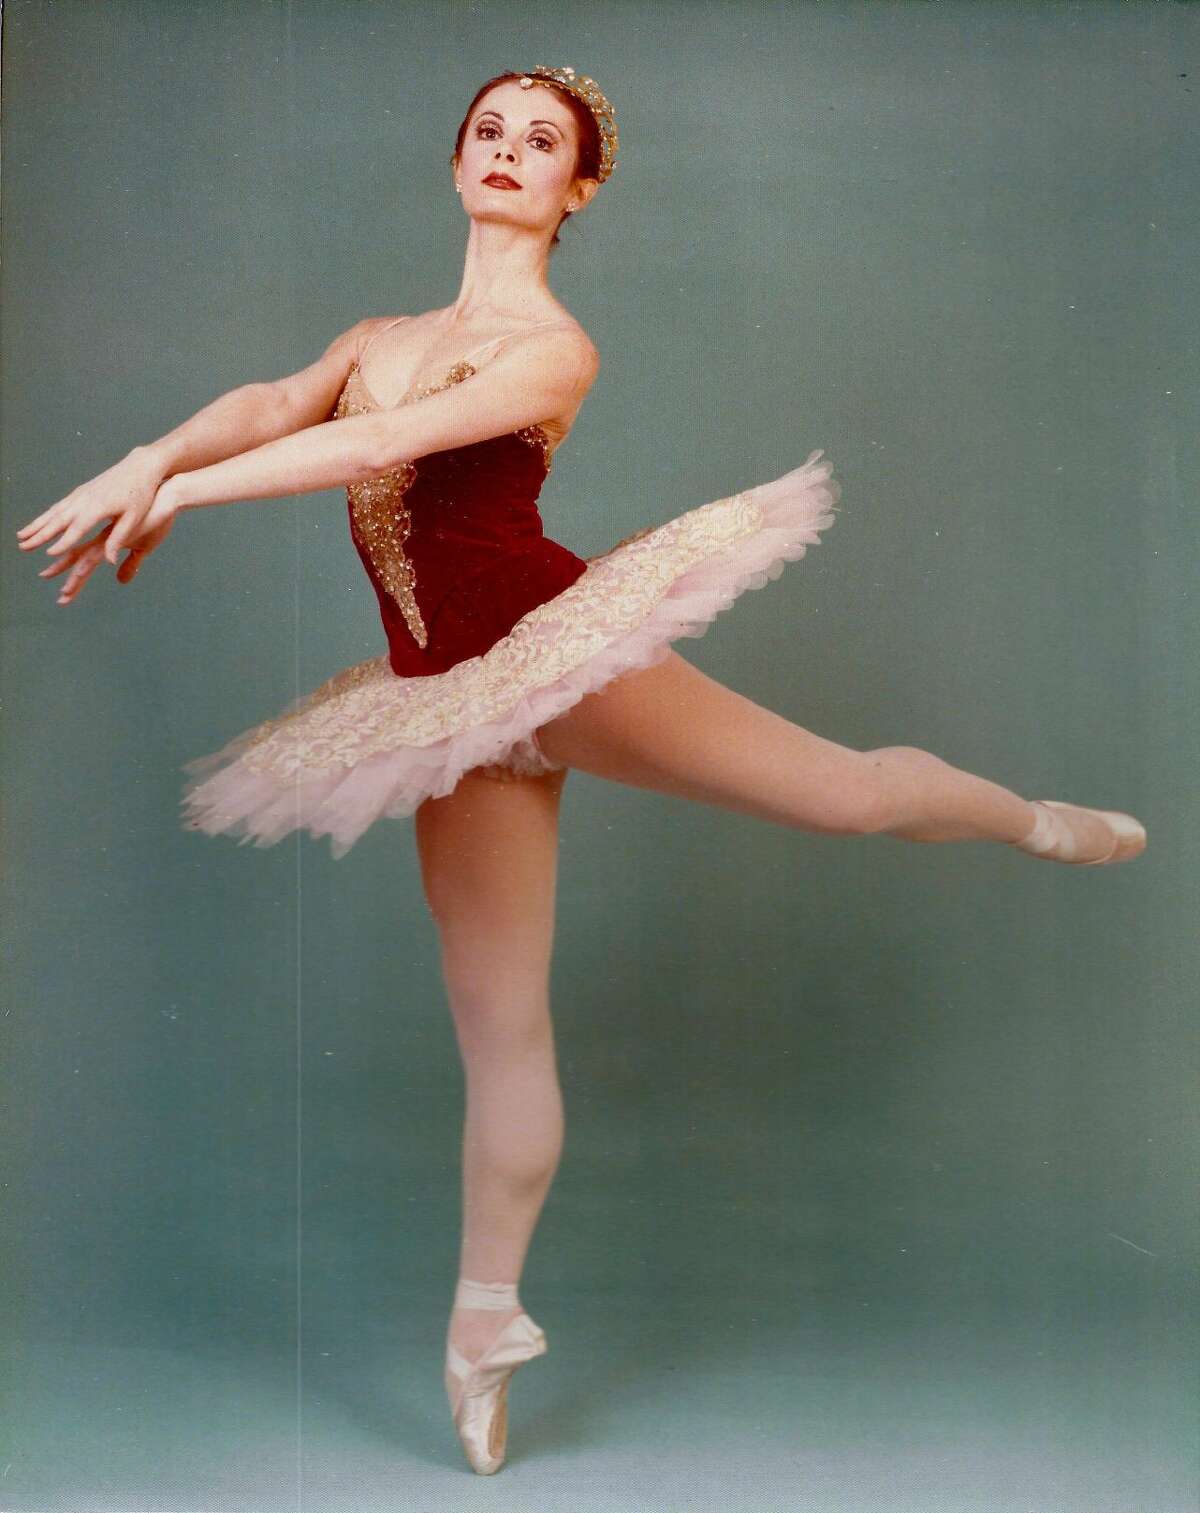 Denise Warner Limoli, Nutmeg’s first ballerina, strikes a pose.